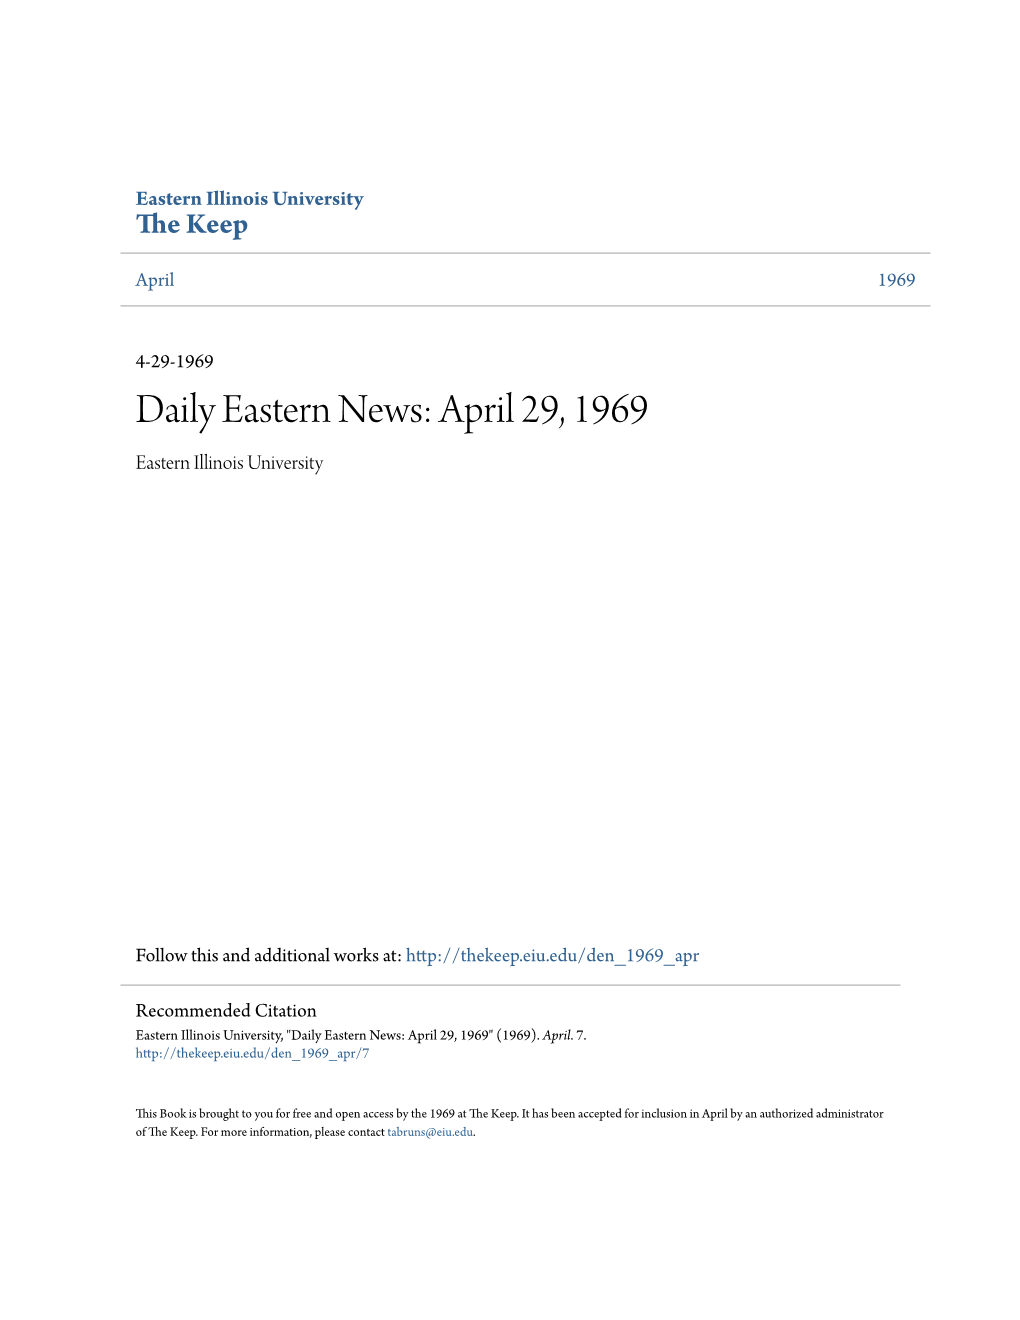 Daily Eastern News: April 29, 1969 Eastern Illinois University